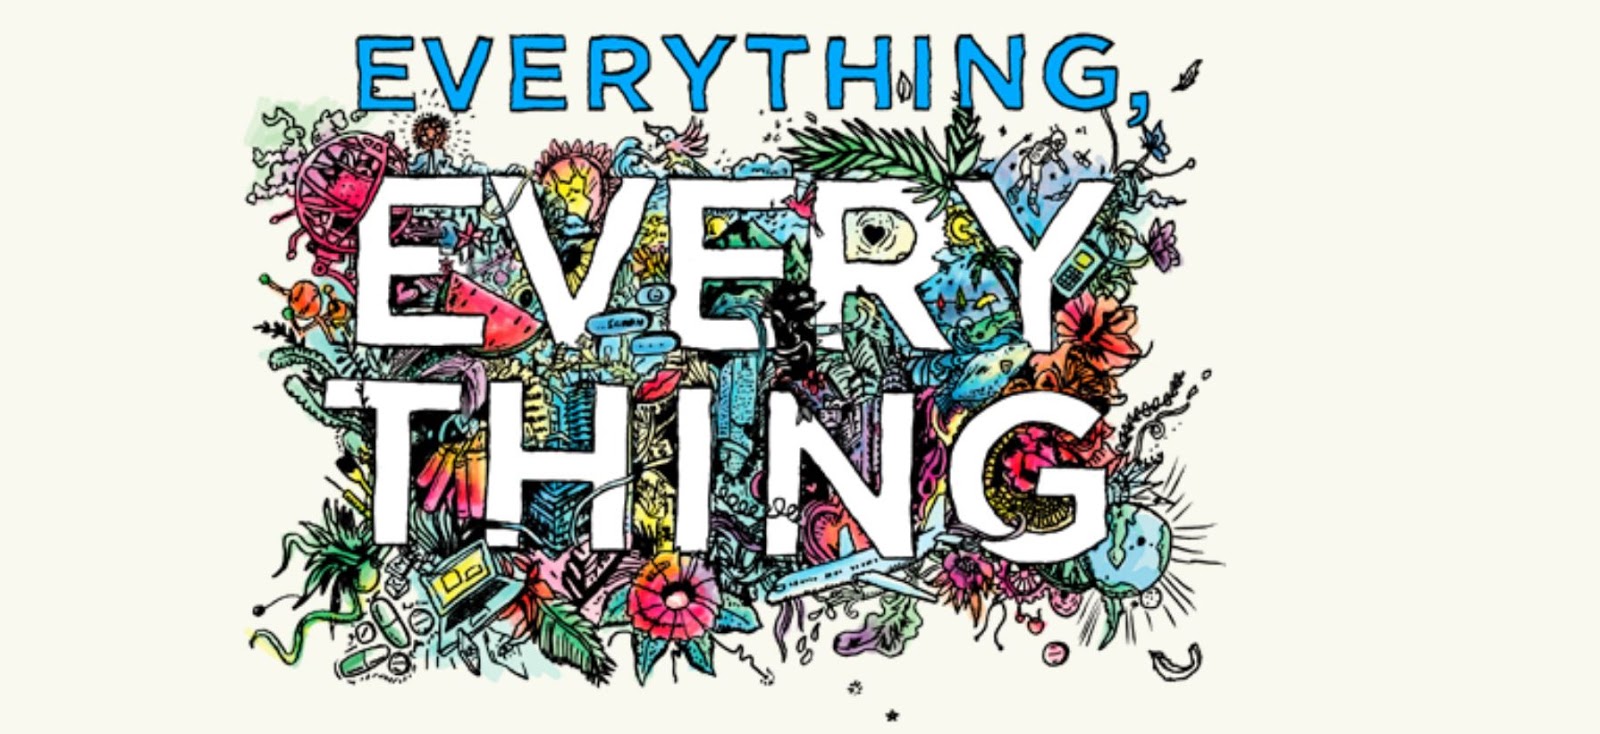 Everything everything live. Everything. Everything игра. Иконка everything. Everything about everything.